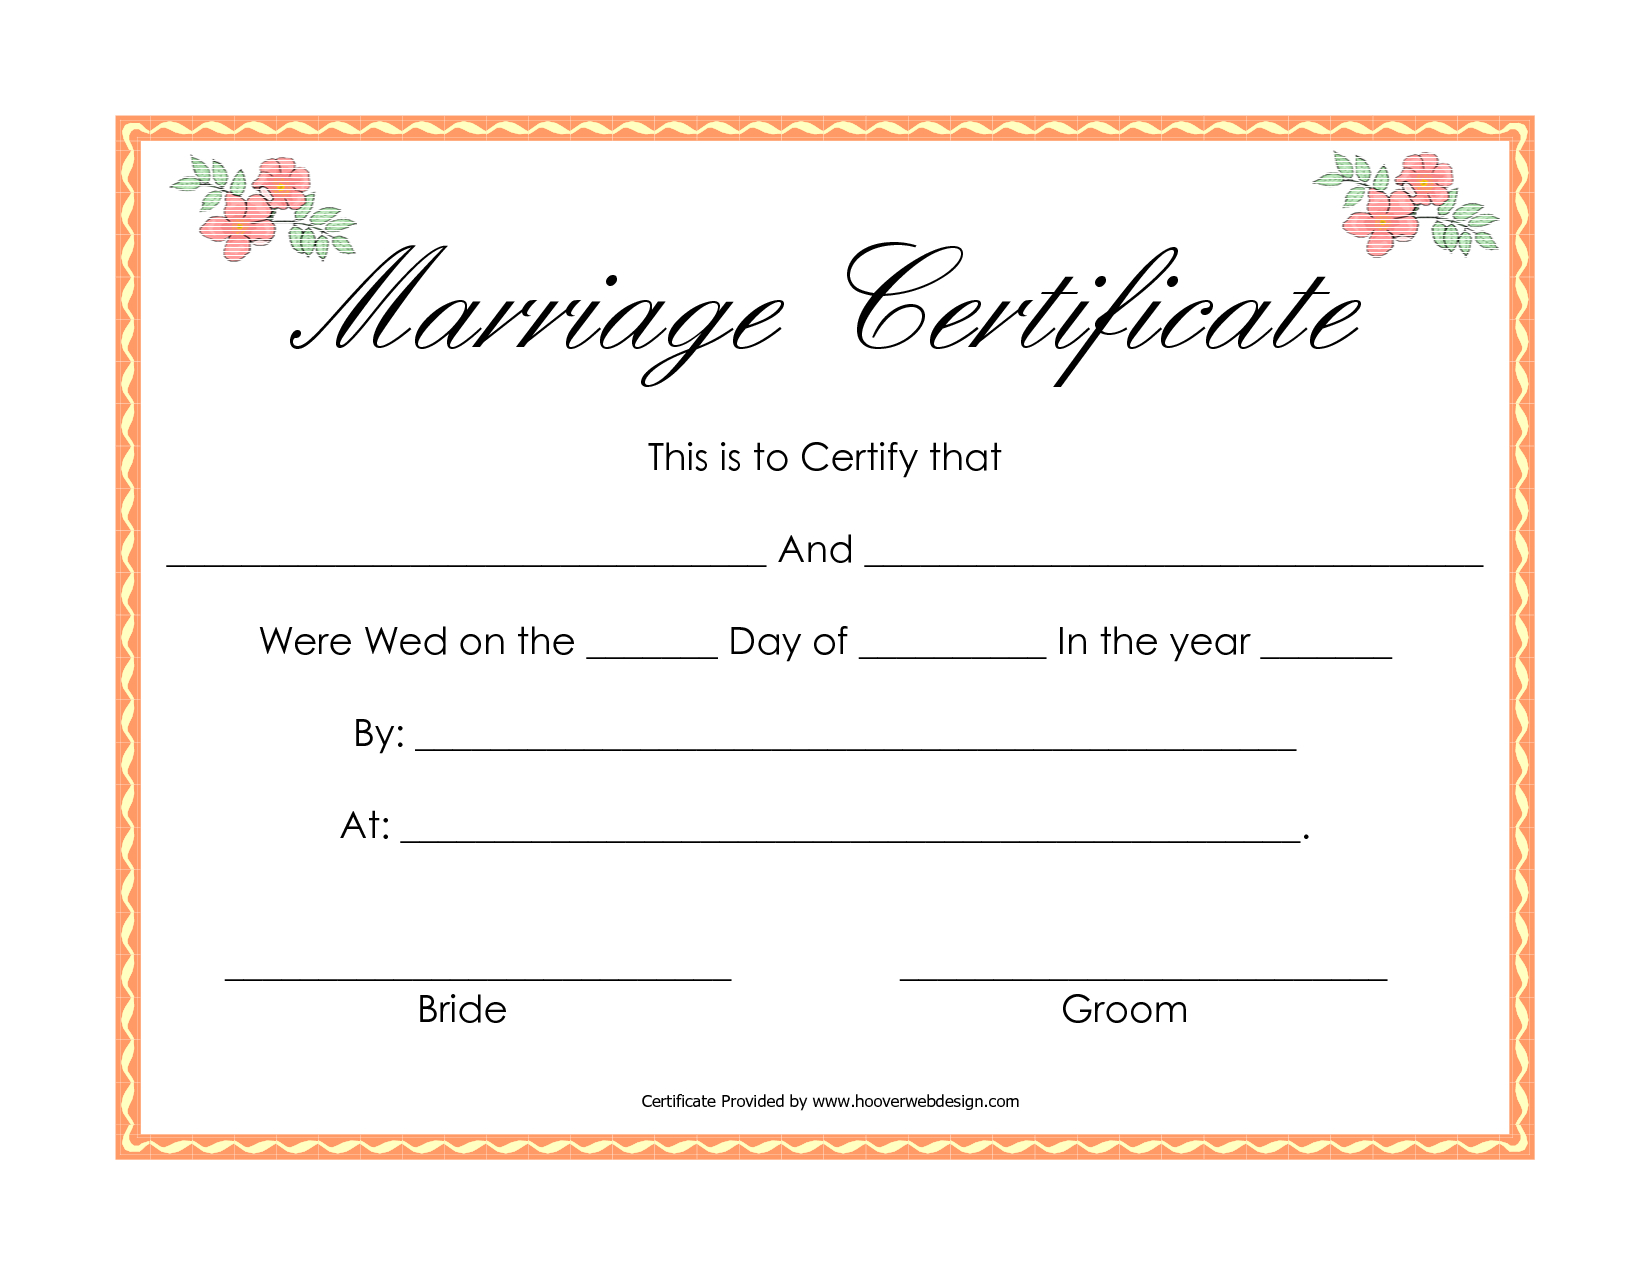 Fake Marriage Certificate | Fake Marriage Certificate | Pinterest - Fake Marriage Certificate Printable Free